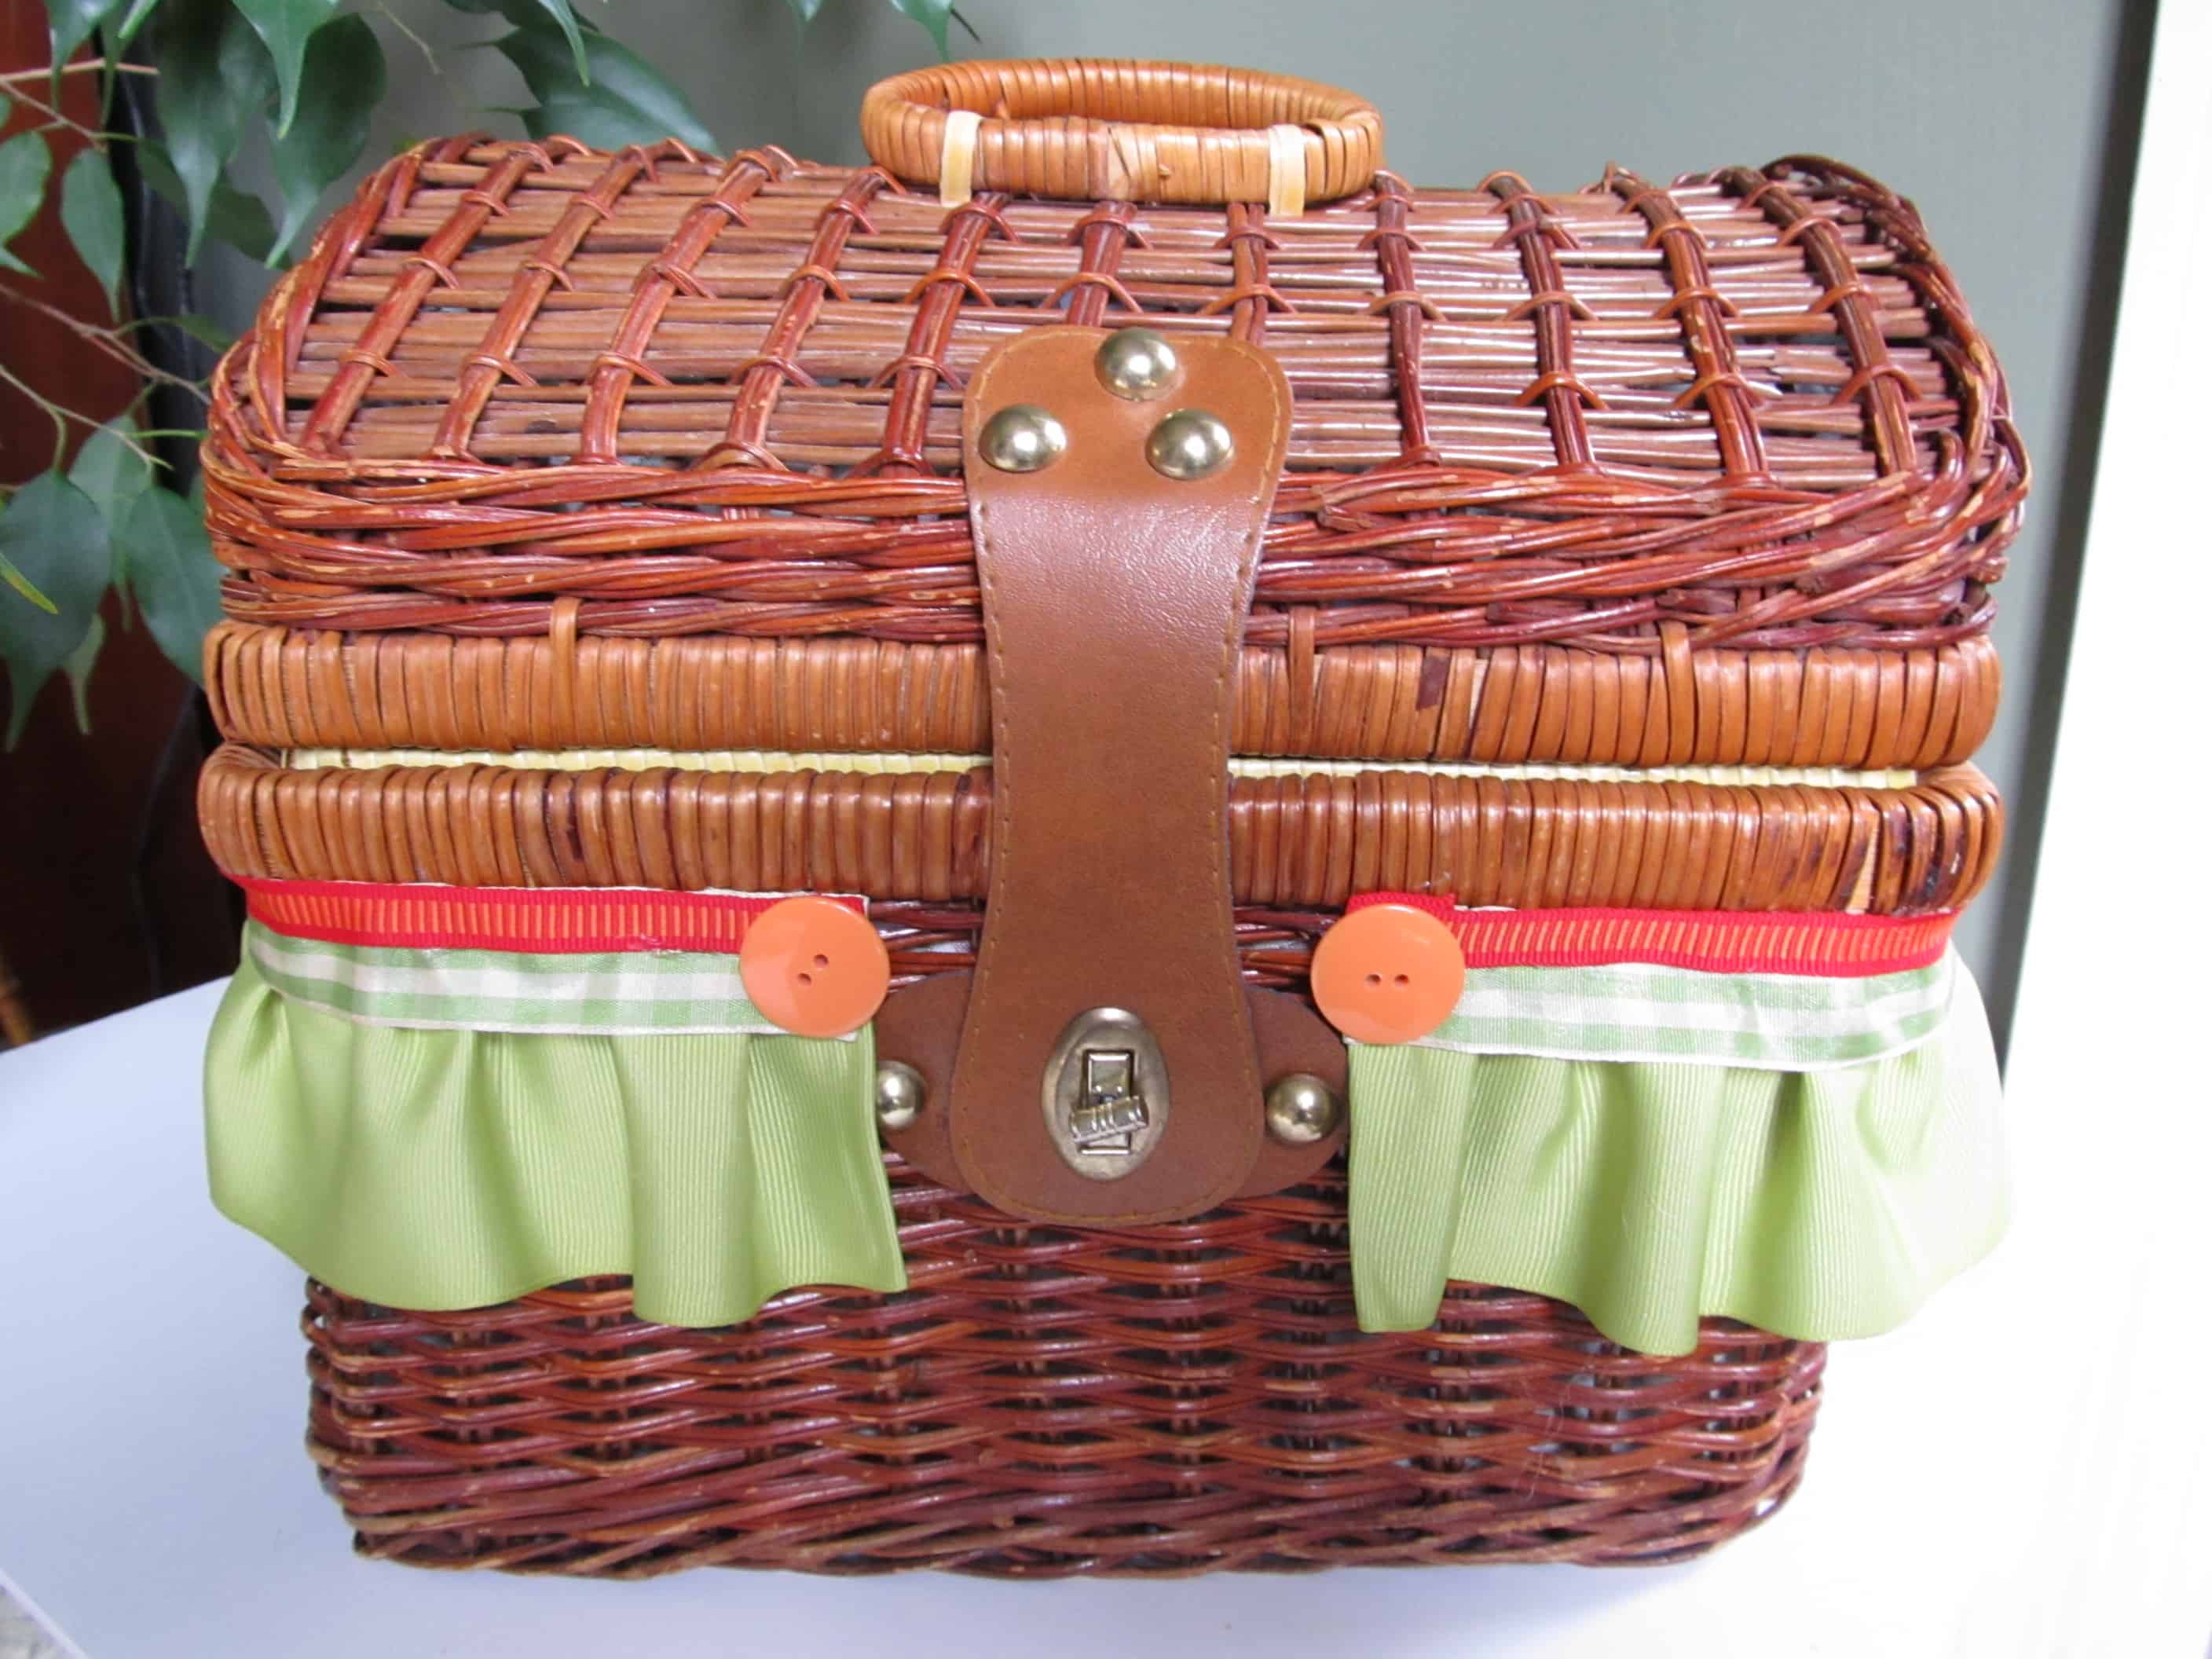 Old-fashioned picnic basket